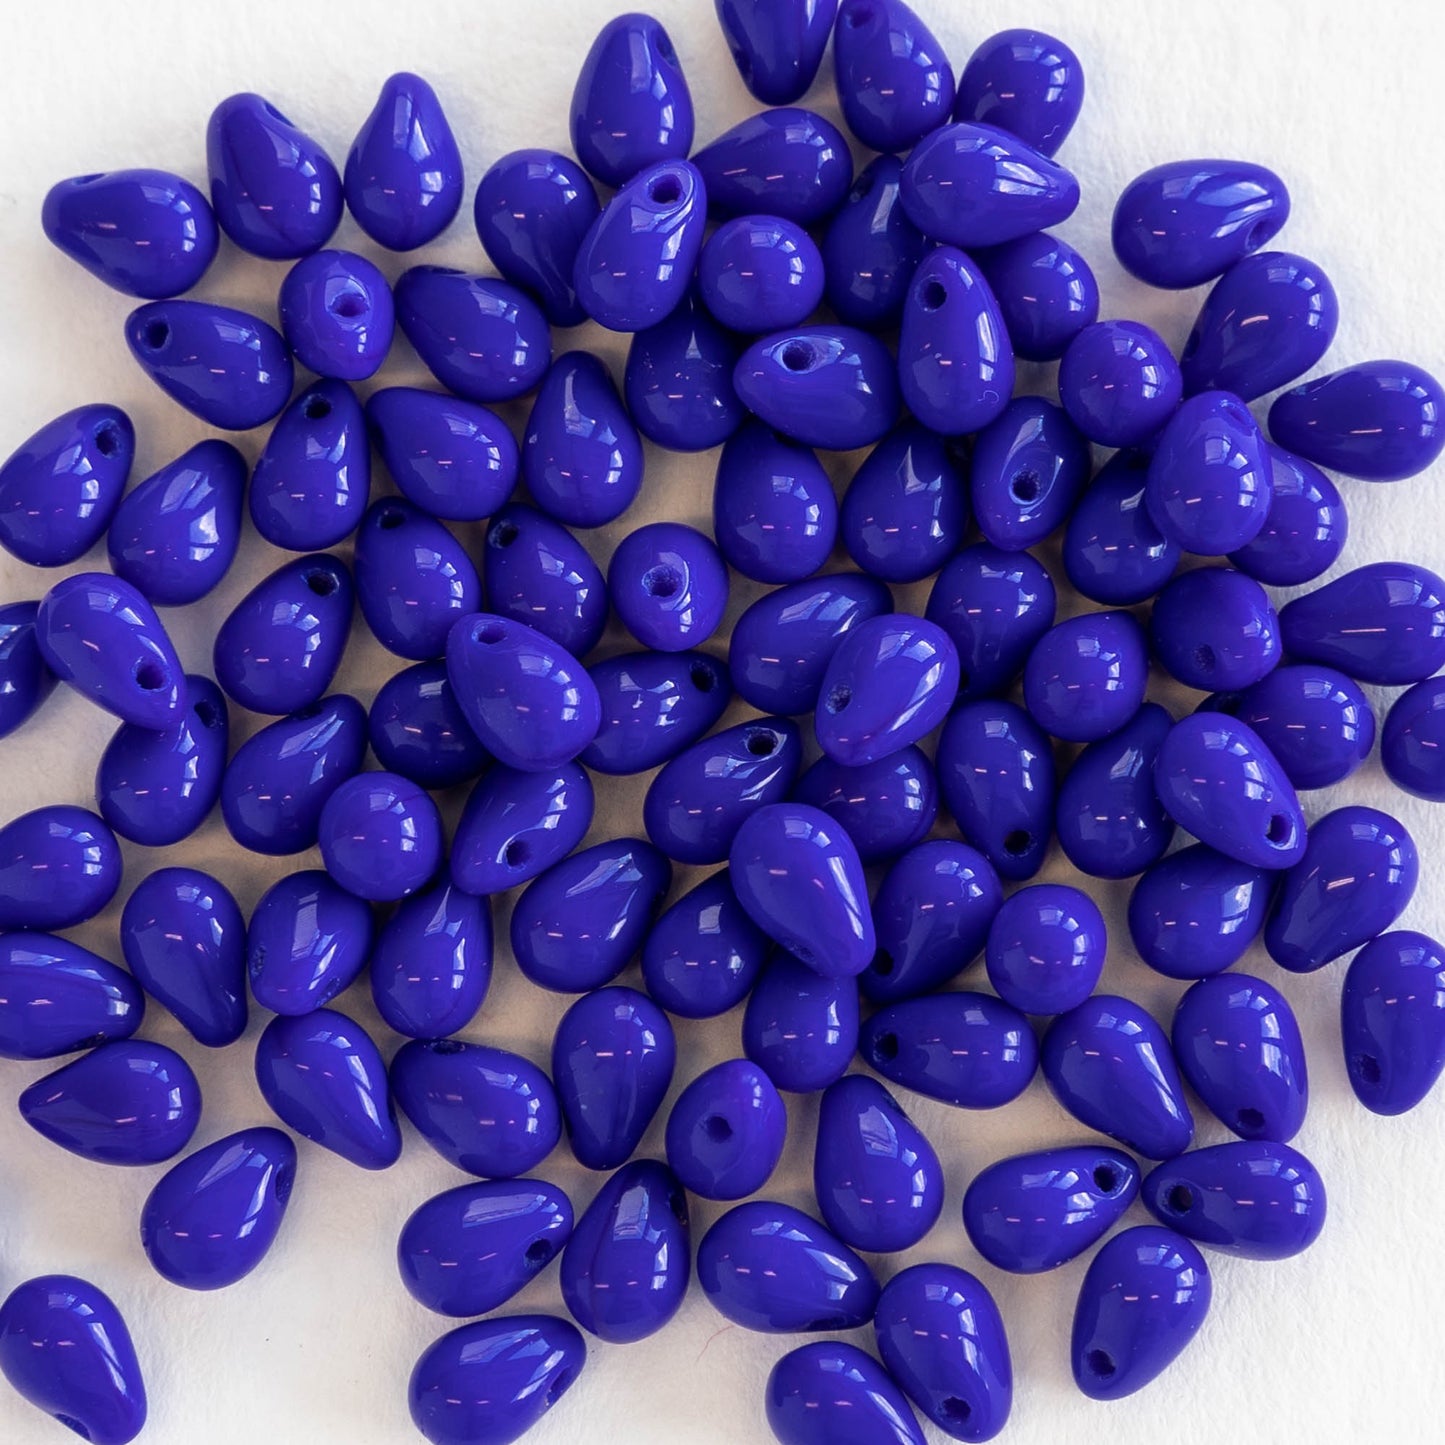 4x6mm Glass Teardrop Beads - Royal Blue - 100 Beads